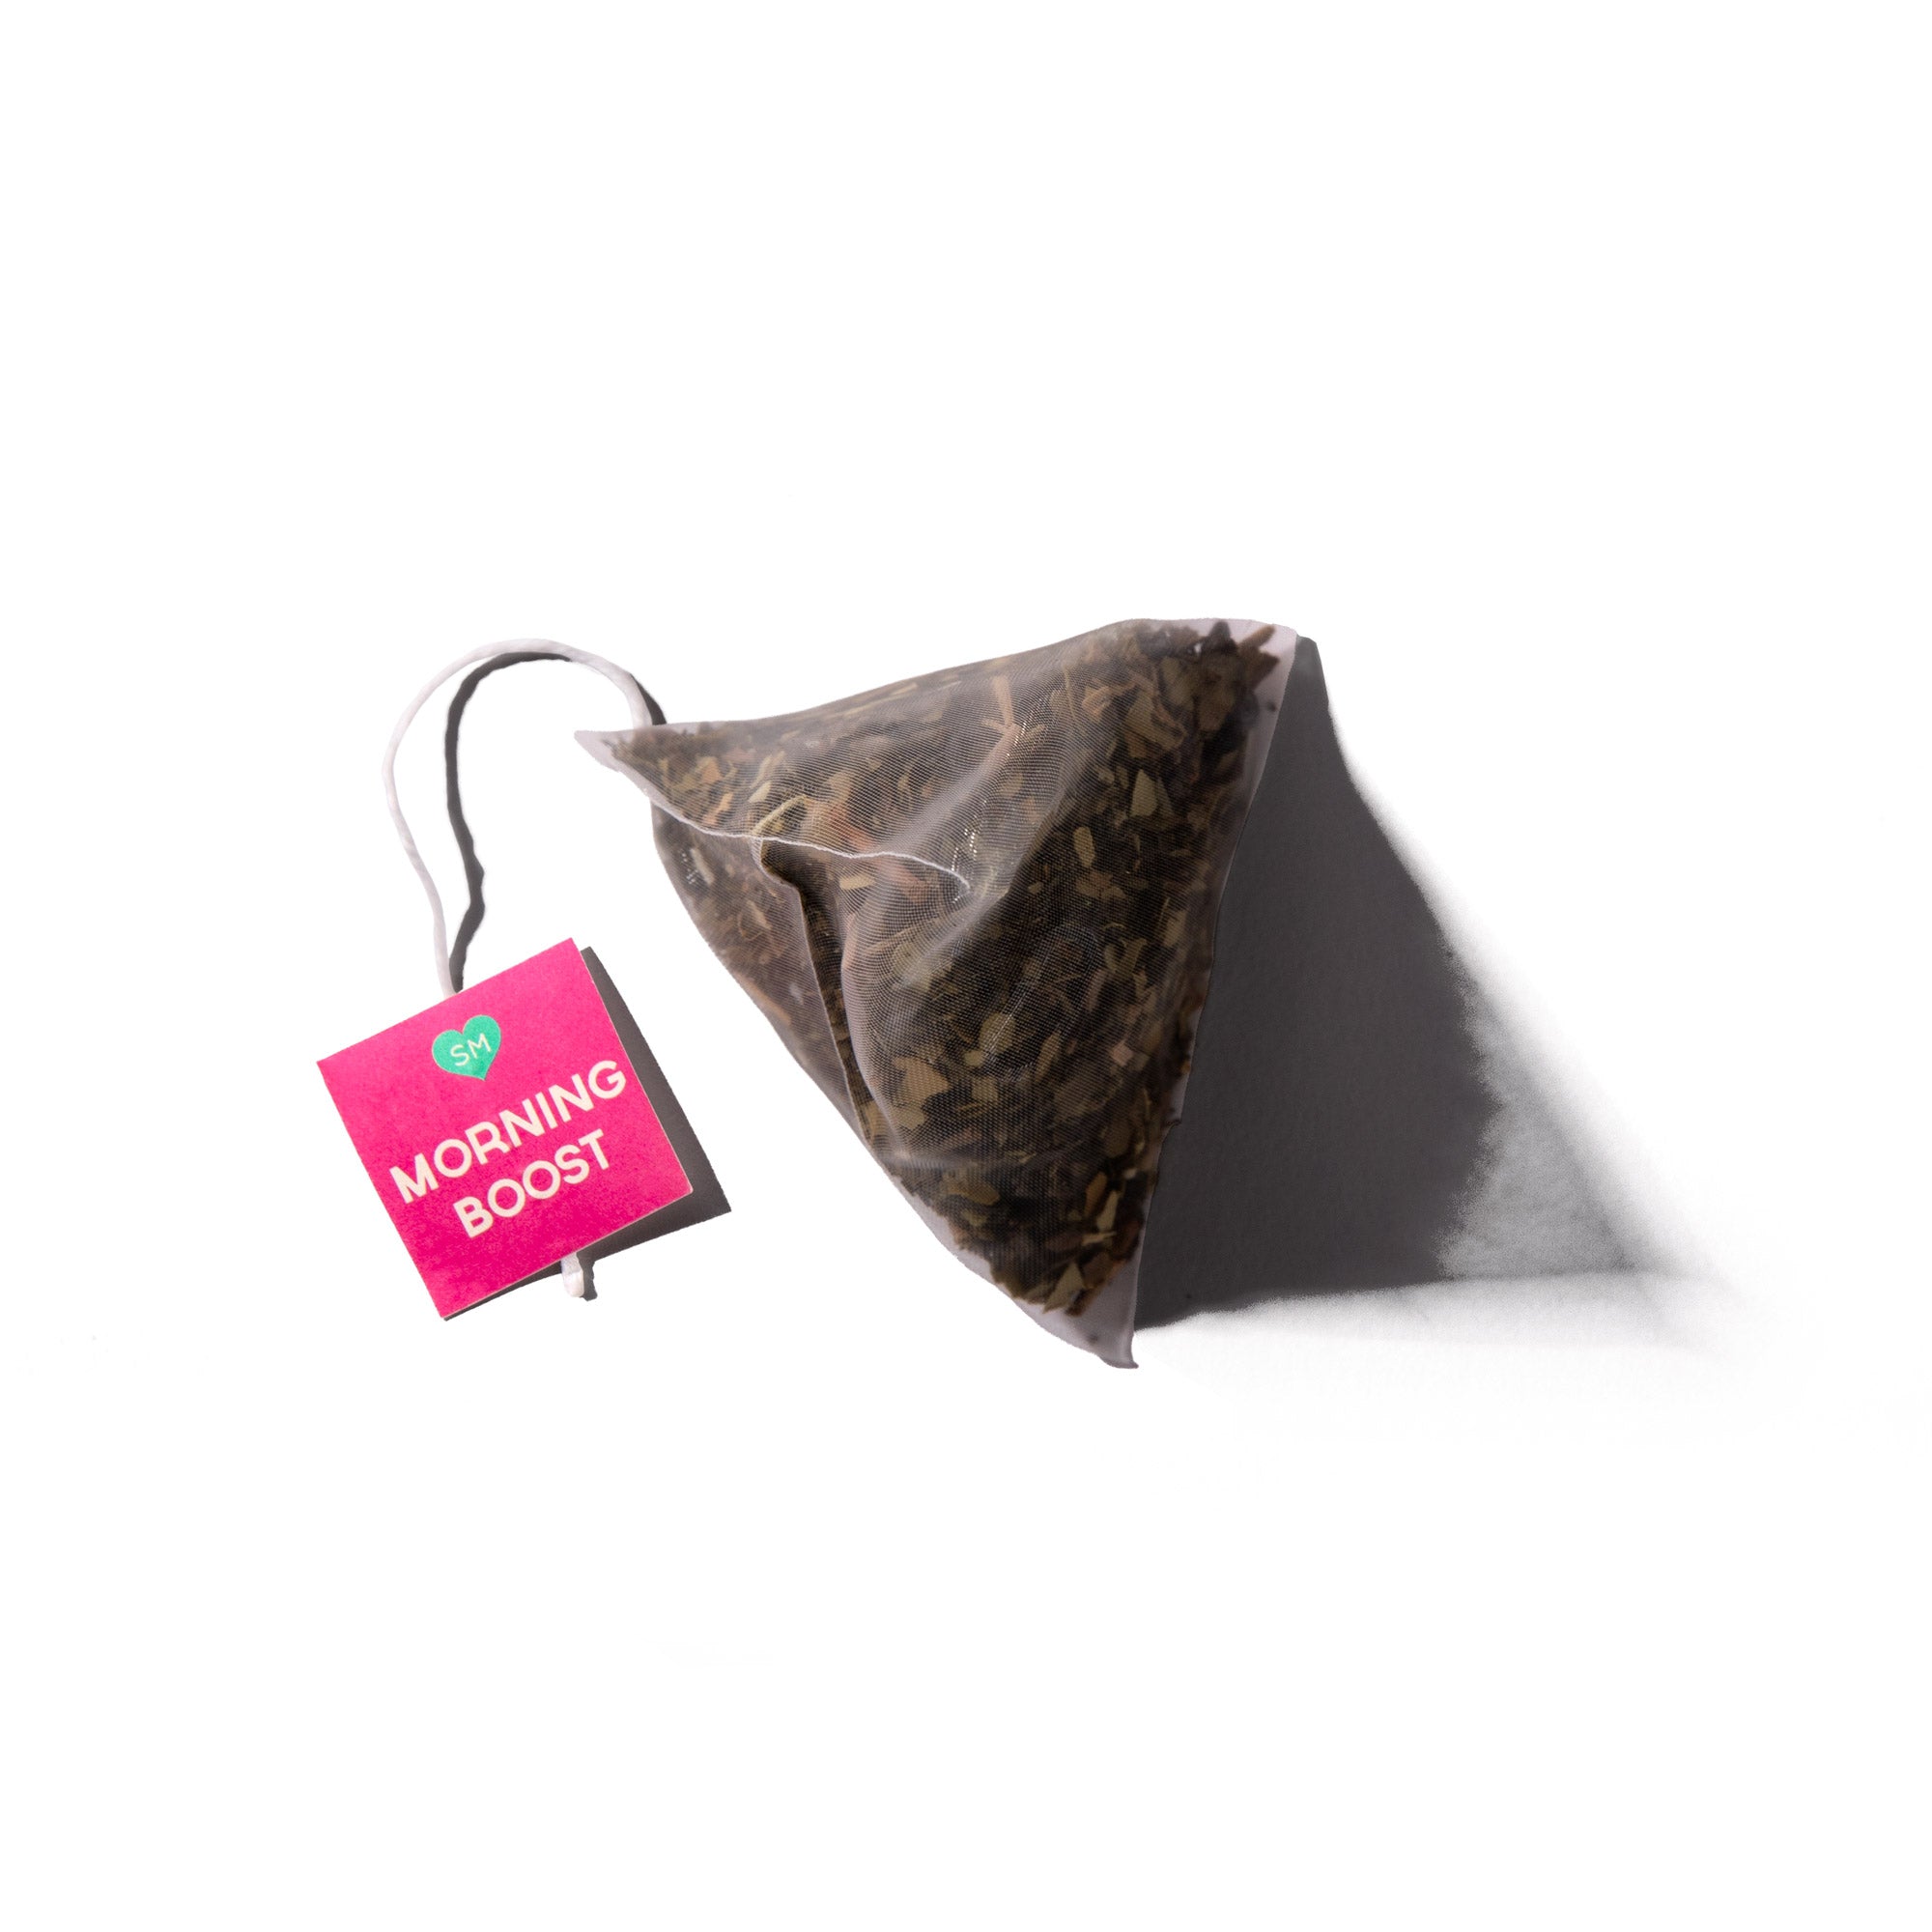 Morning Boost tea bag